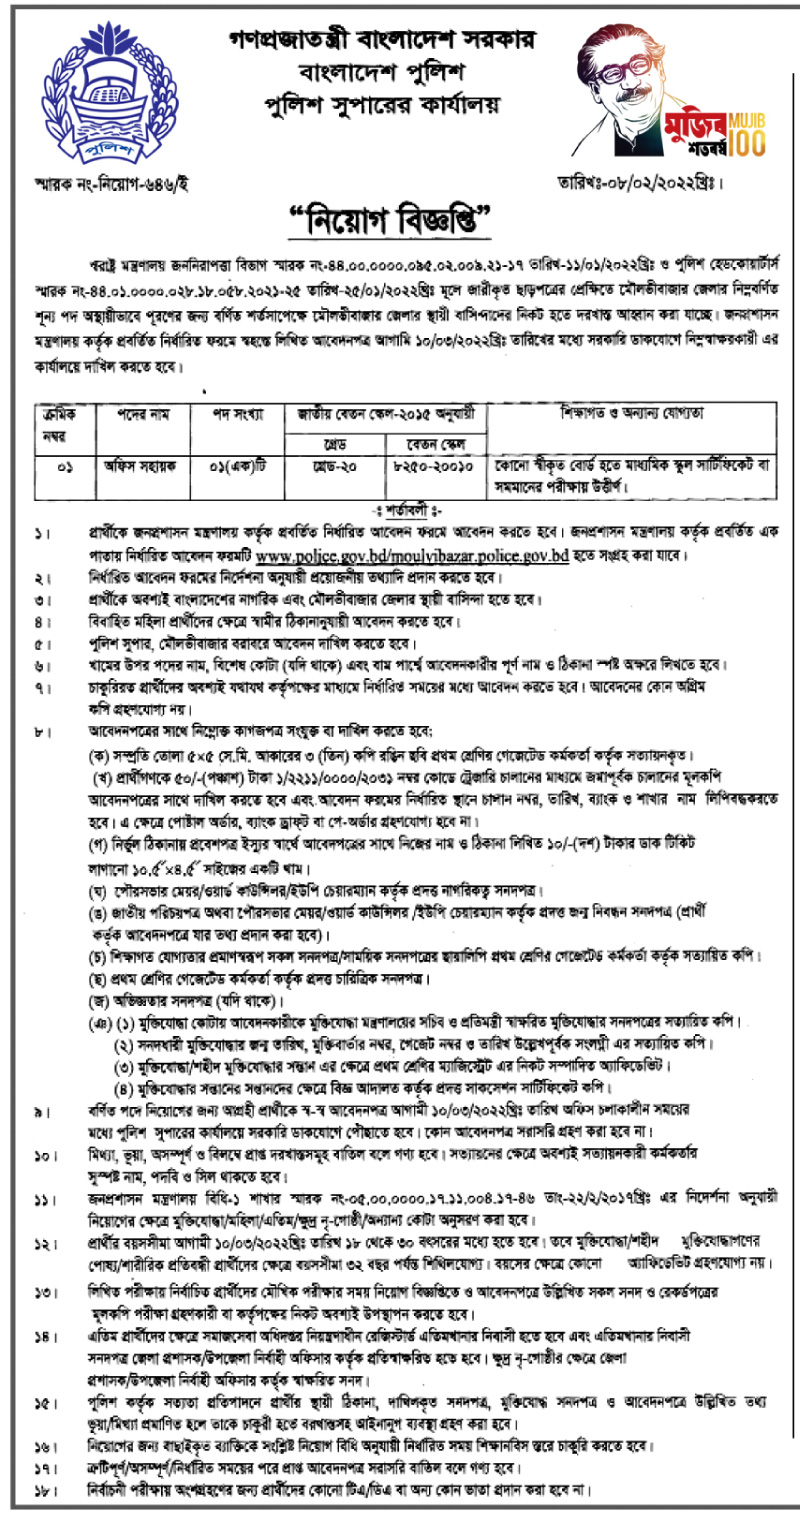 Bangladesh Police Super Office Job Circular